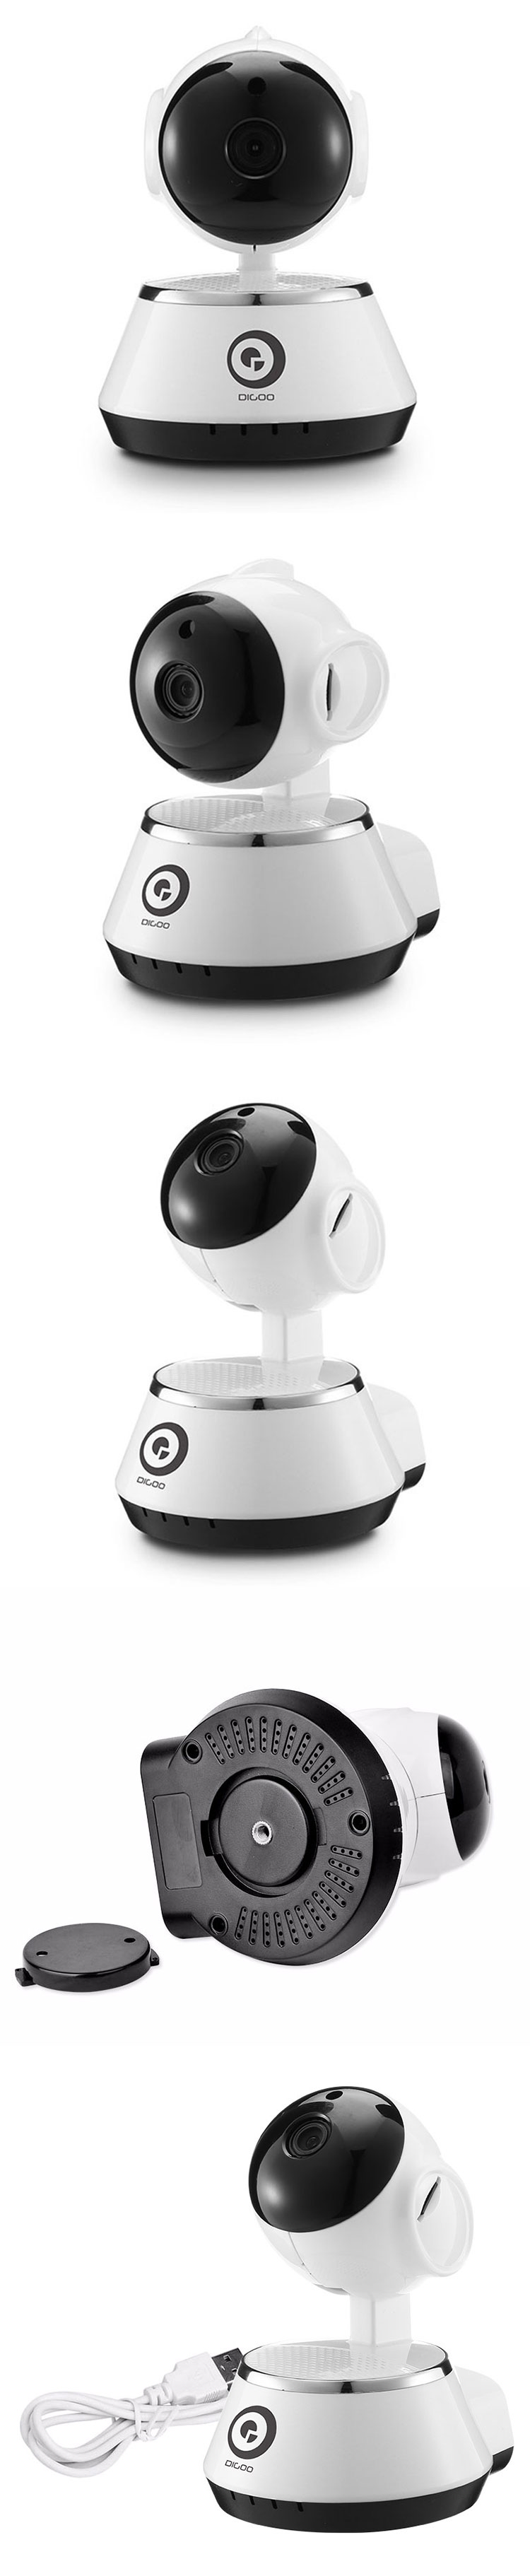 Digoo BB-M1 Wireless WiFi USB Baby Monitor Alarm Home Security IP Camera HD 720P Audio Netip